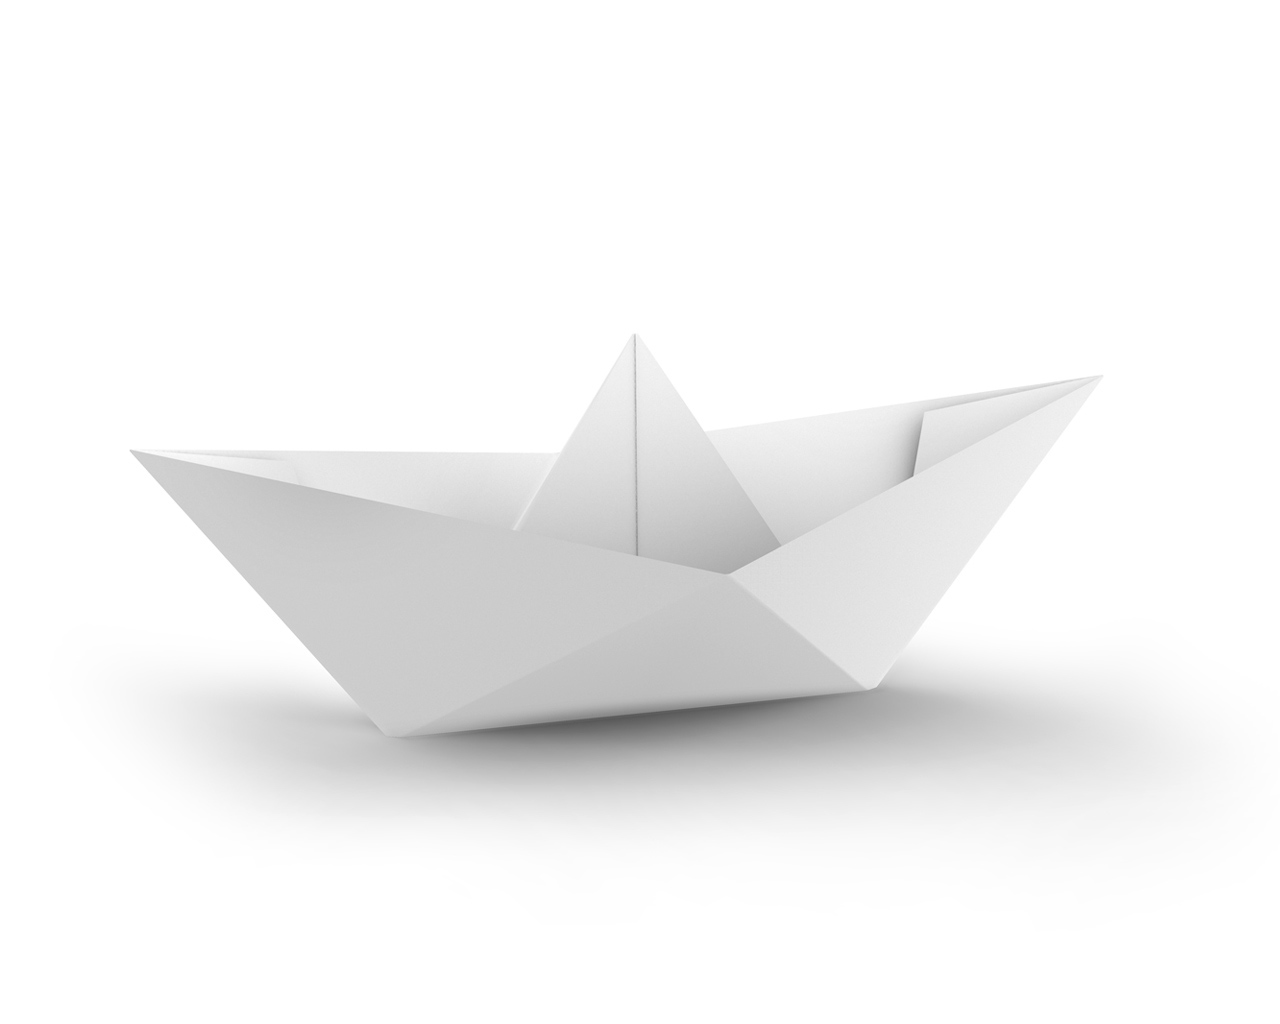 White Paper Boat